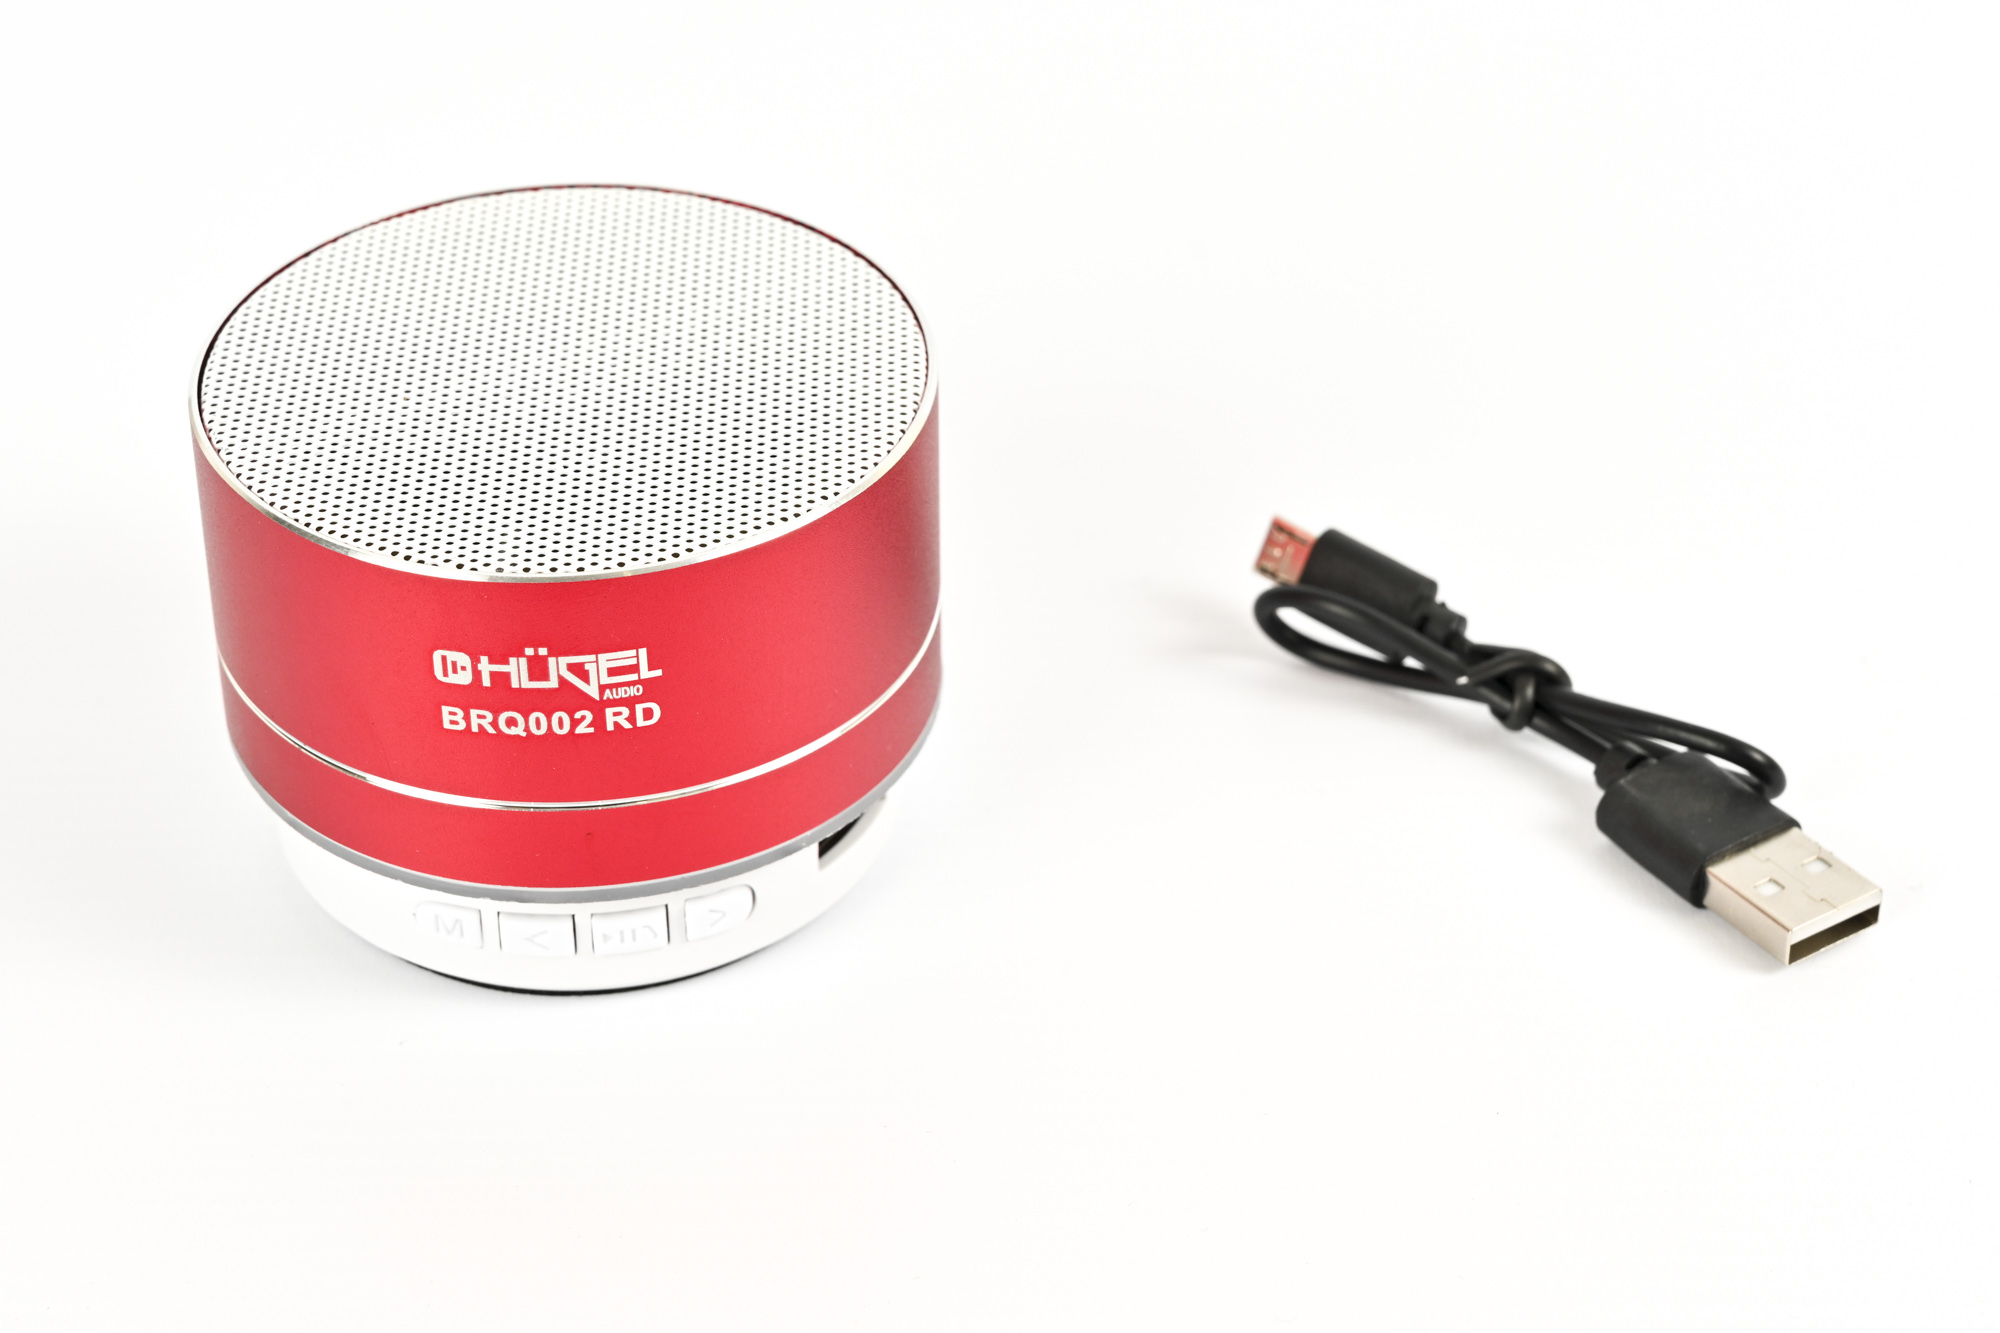 Parlante Bluetooth Hügel S51 Portatil Grande 5w Rojo - Music Shaker